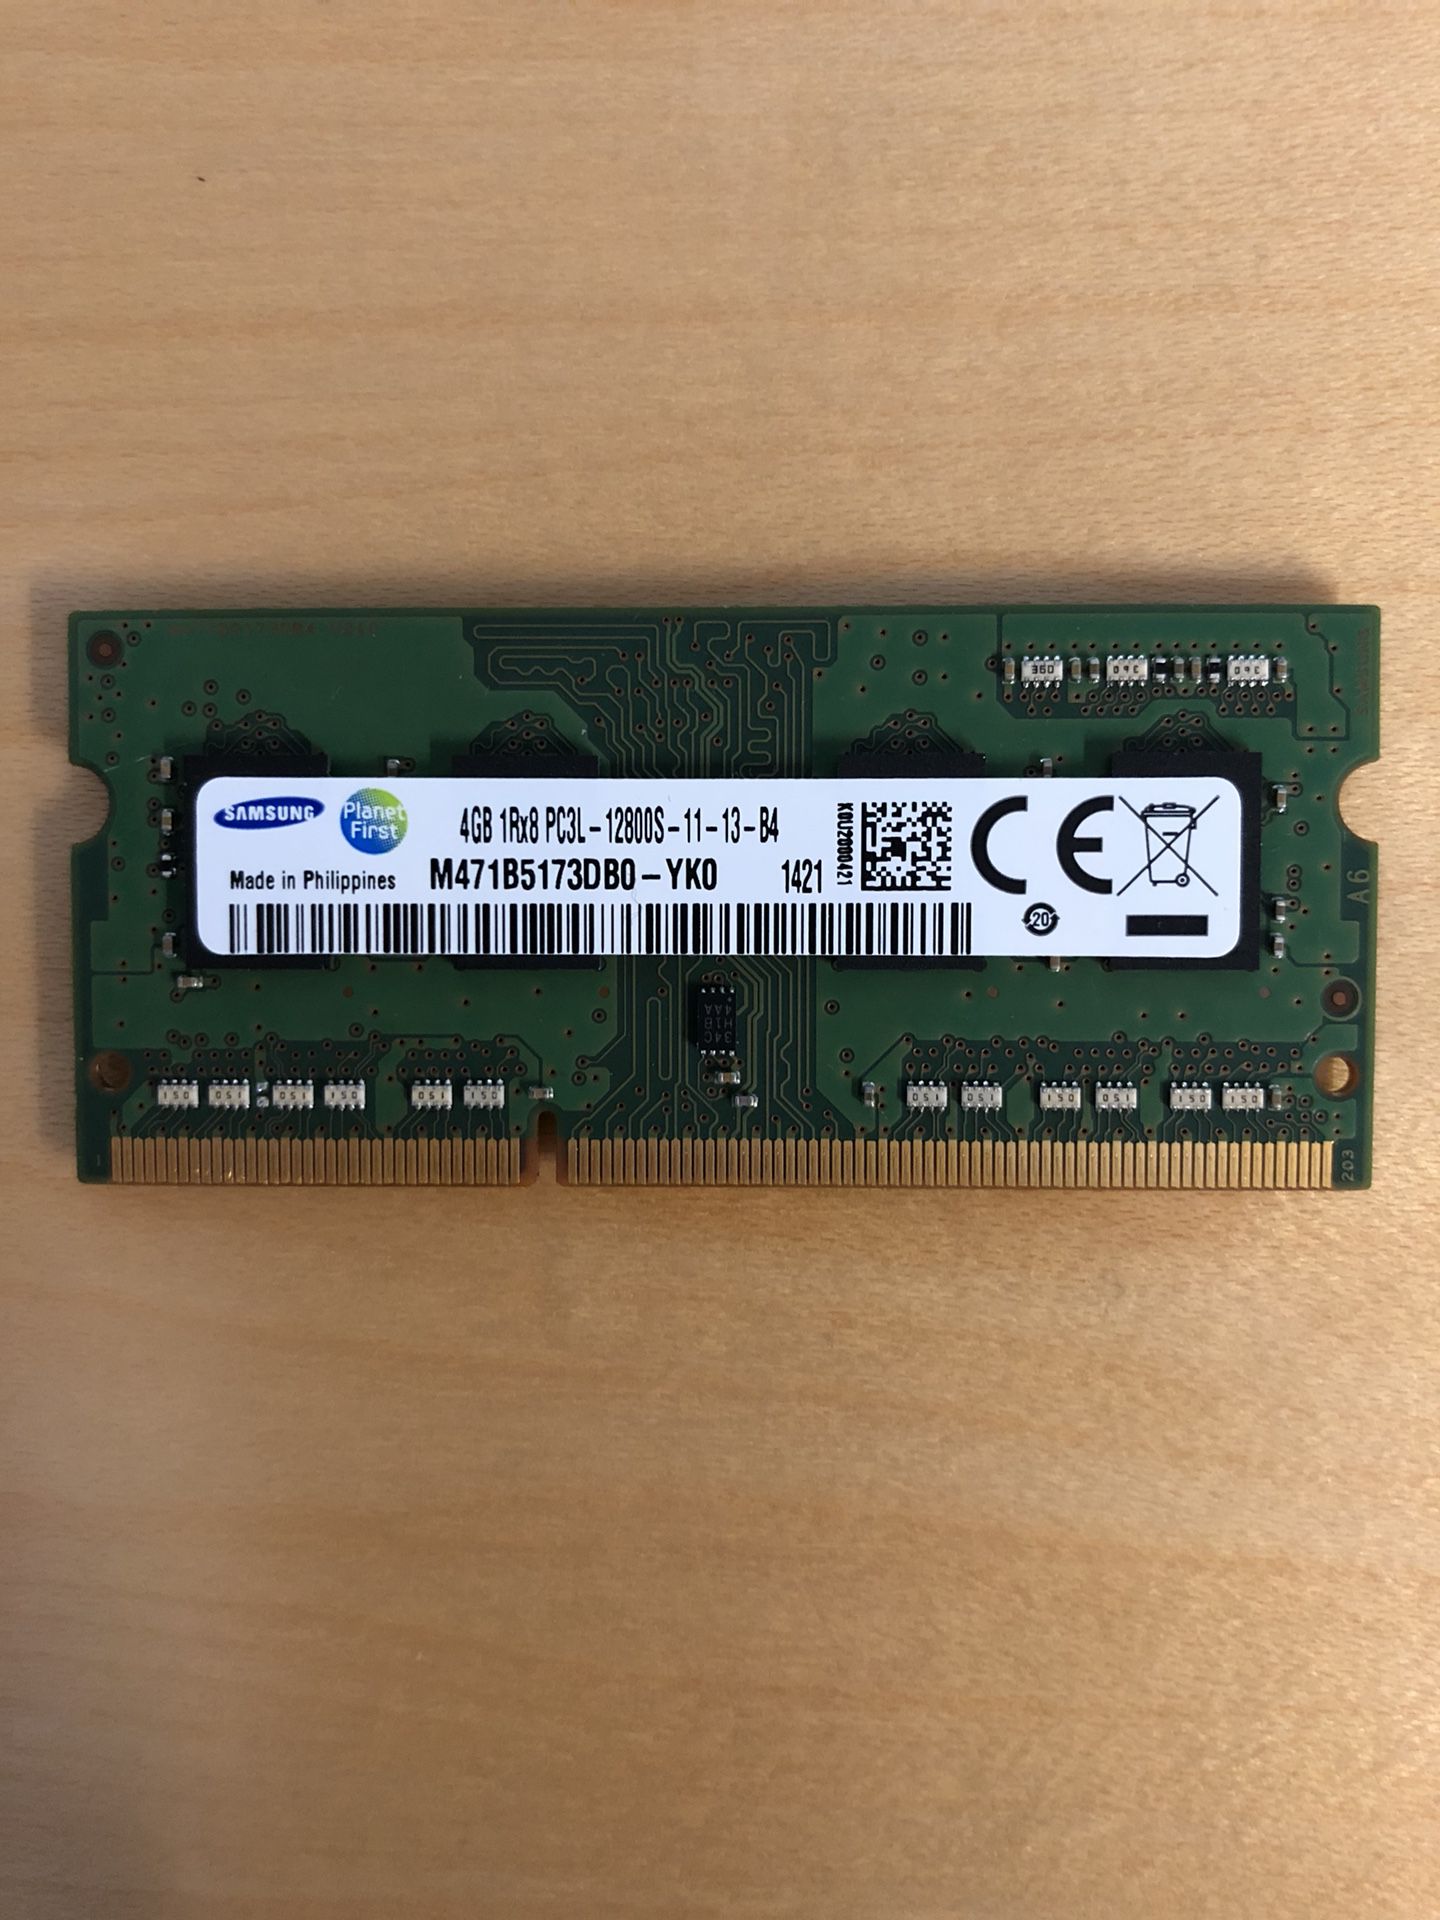 4GB Ram SoDIMM laptop memory sticks (multiple available)